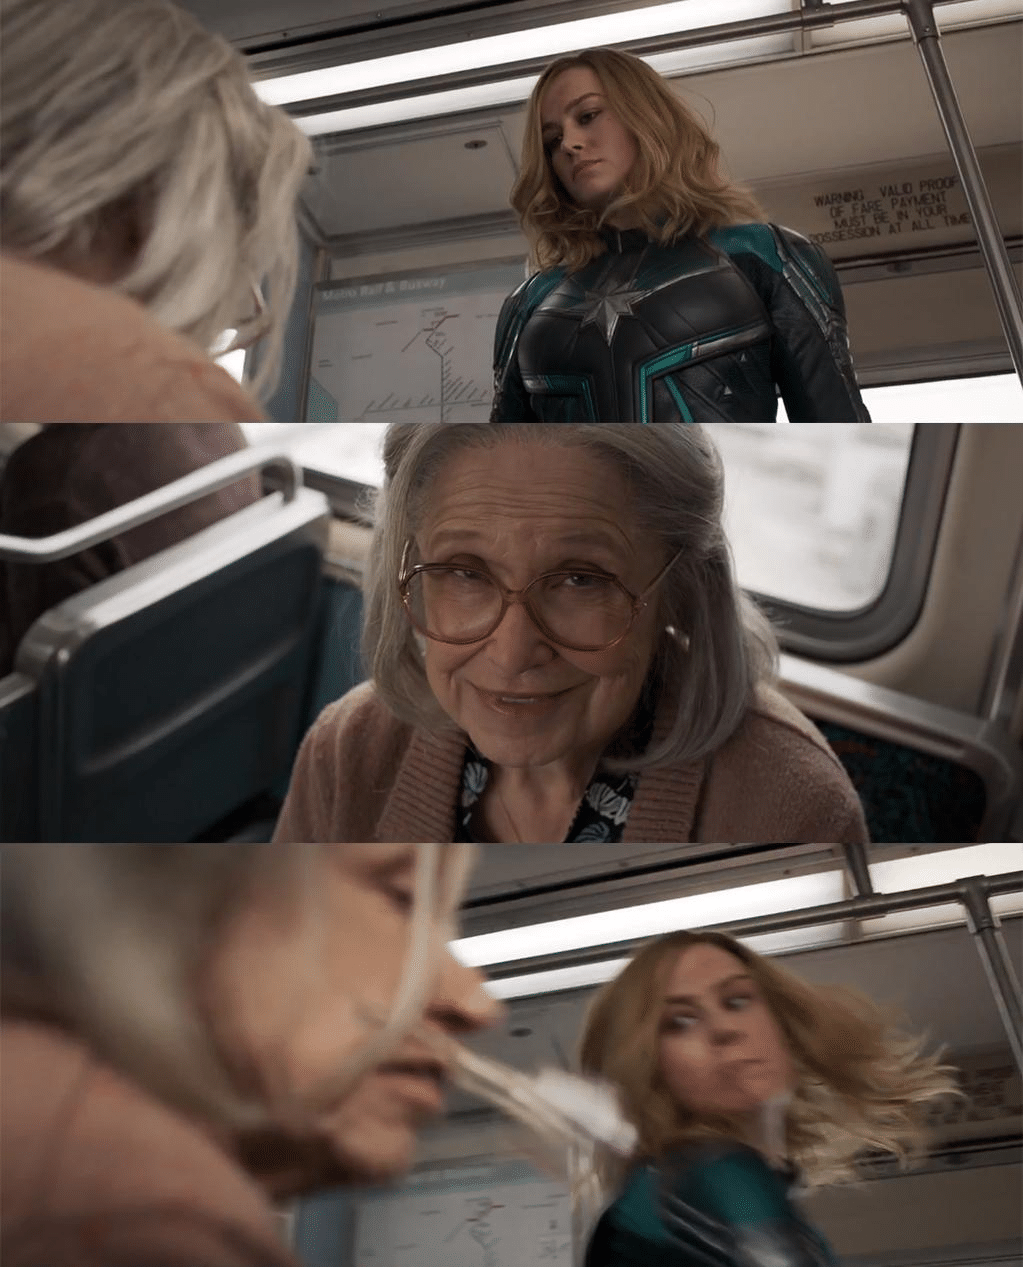 Meme Generator - Brie Larson / Captain Marvel Punching Old Woman - Newfa St...